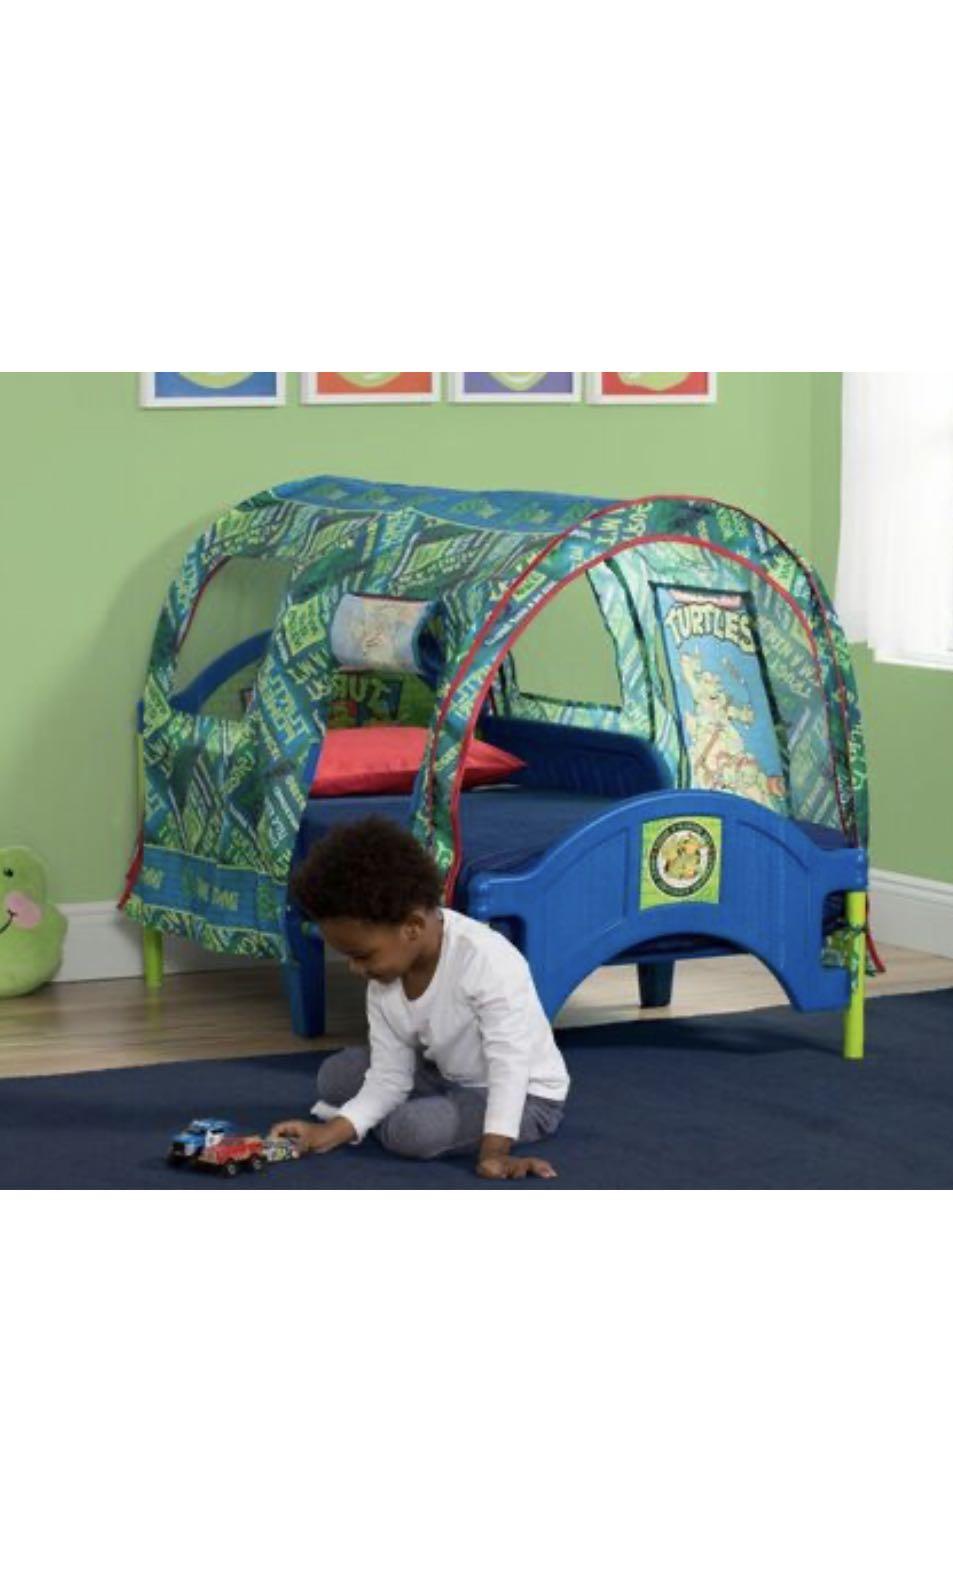 Nickelodeon Teenage Mutant Ninja Turtles Toddler Tent Bed - Delta